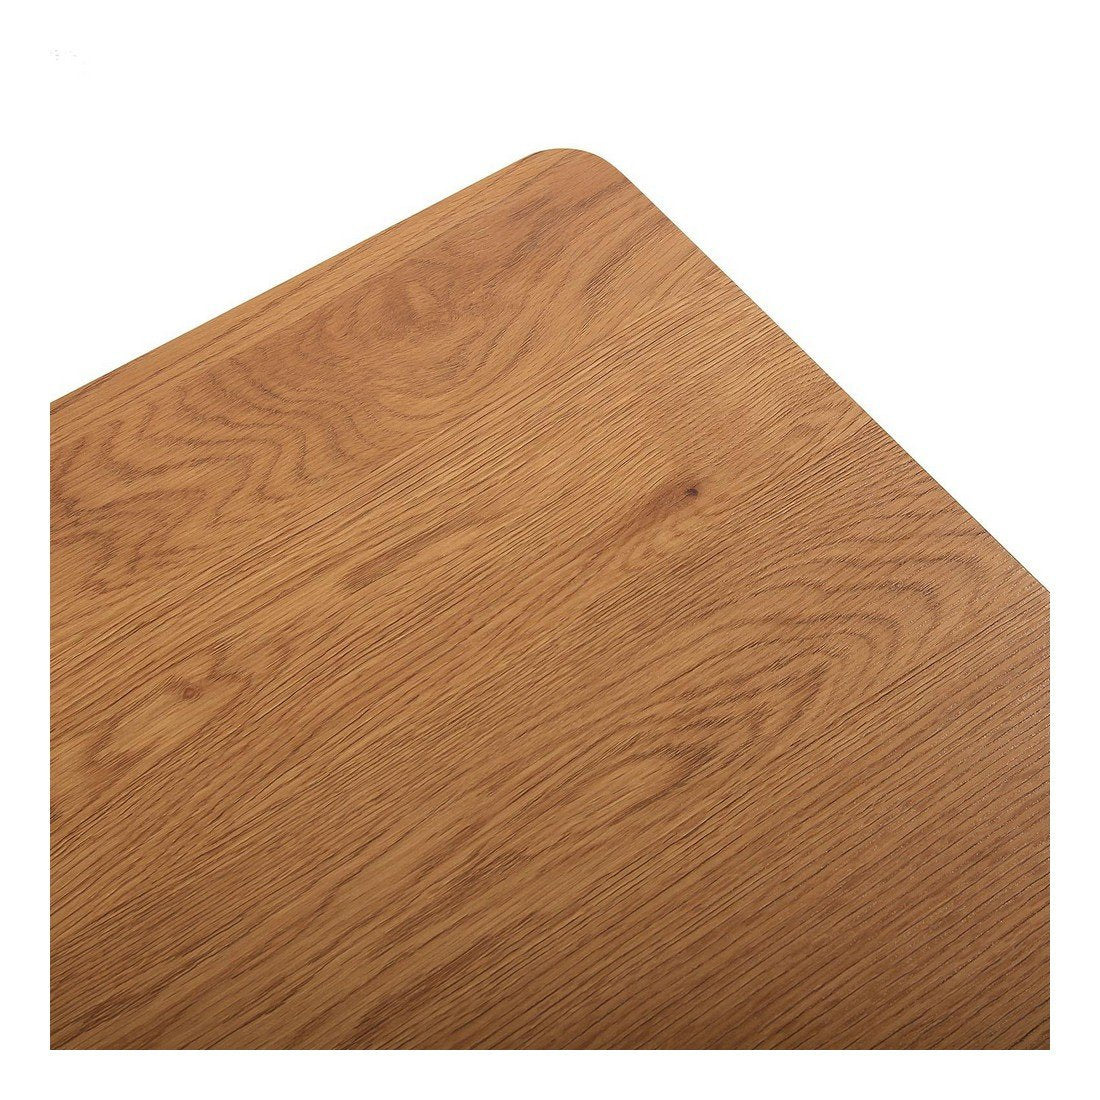 Martha Scandinavian wooden table